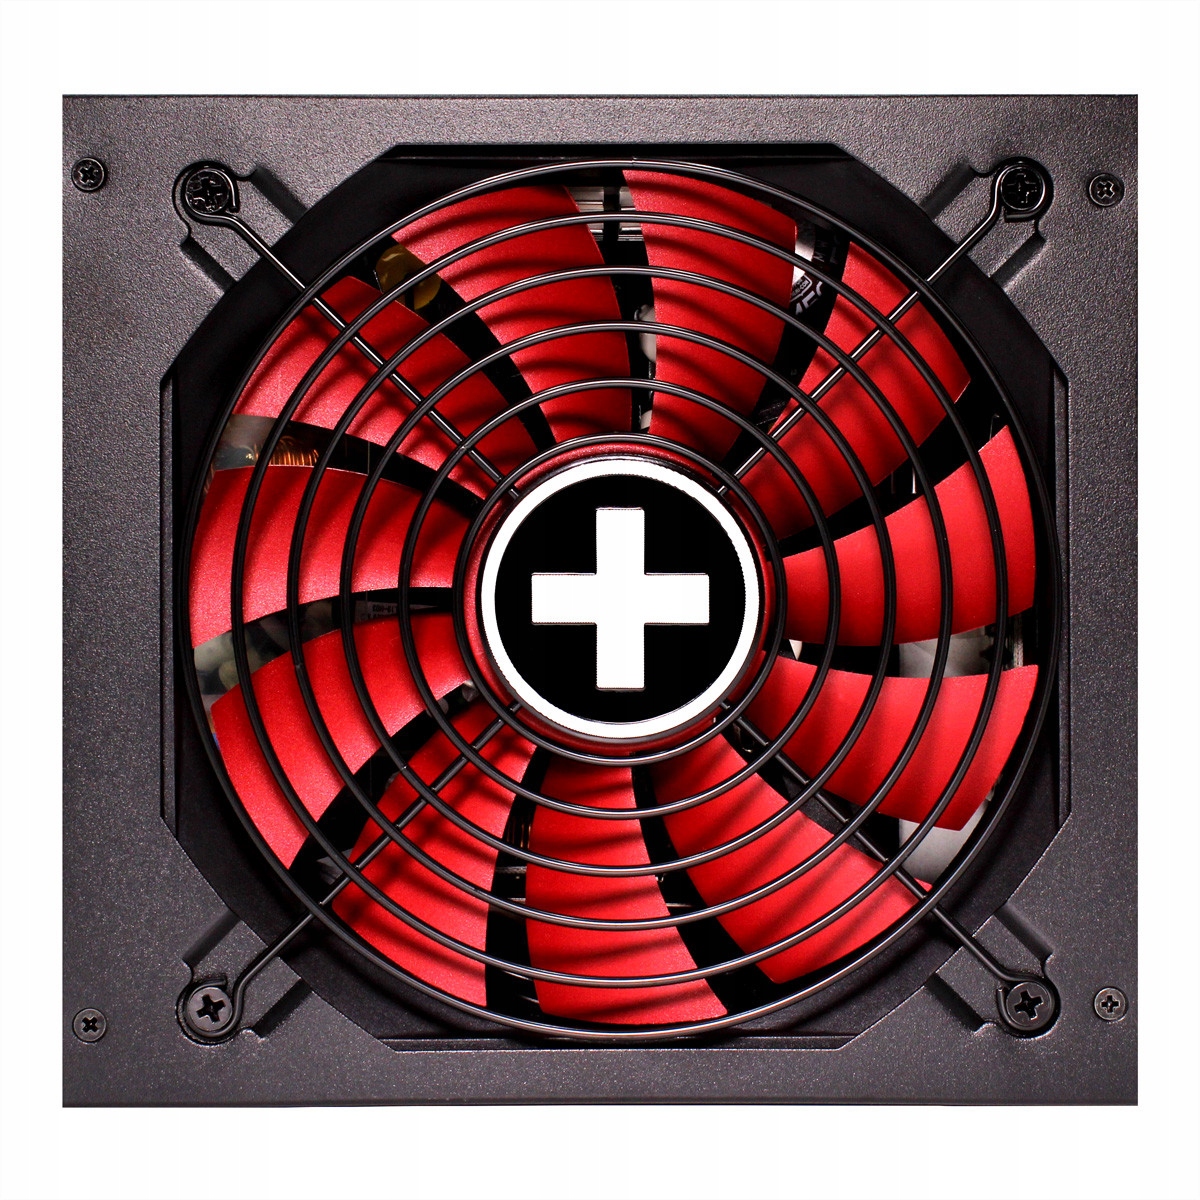 Pc zdroj ventilátor Xilence XP850MR9.2 Voeding 850W Atx 3.0